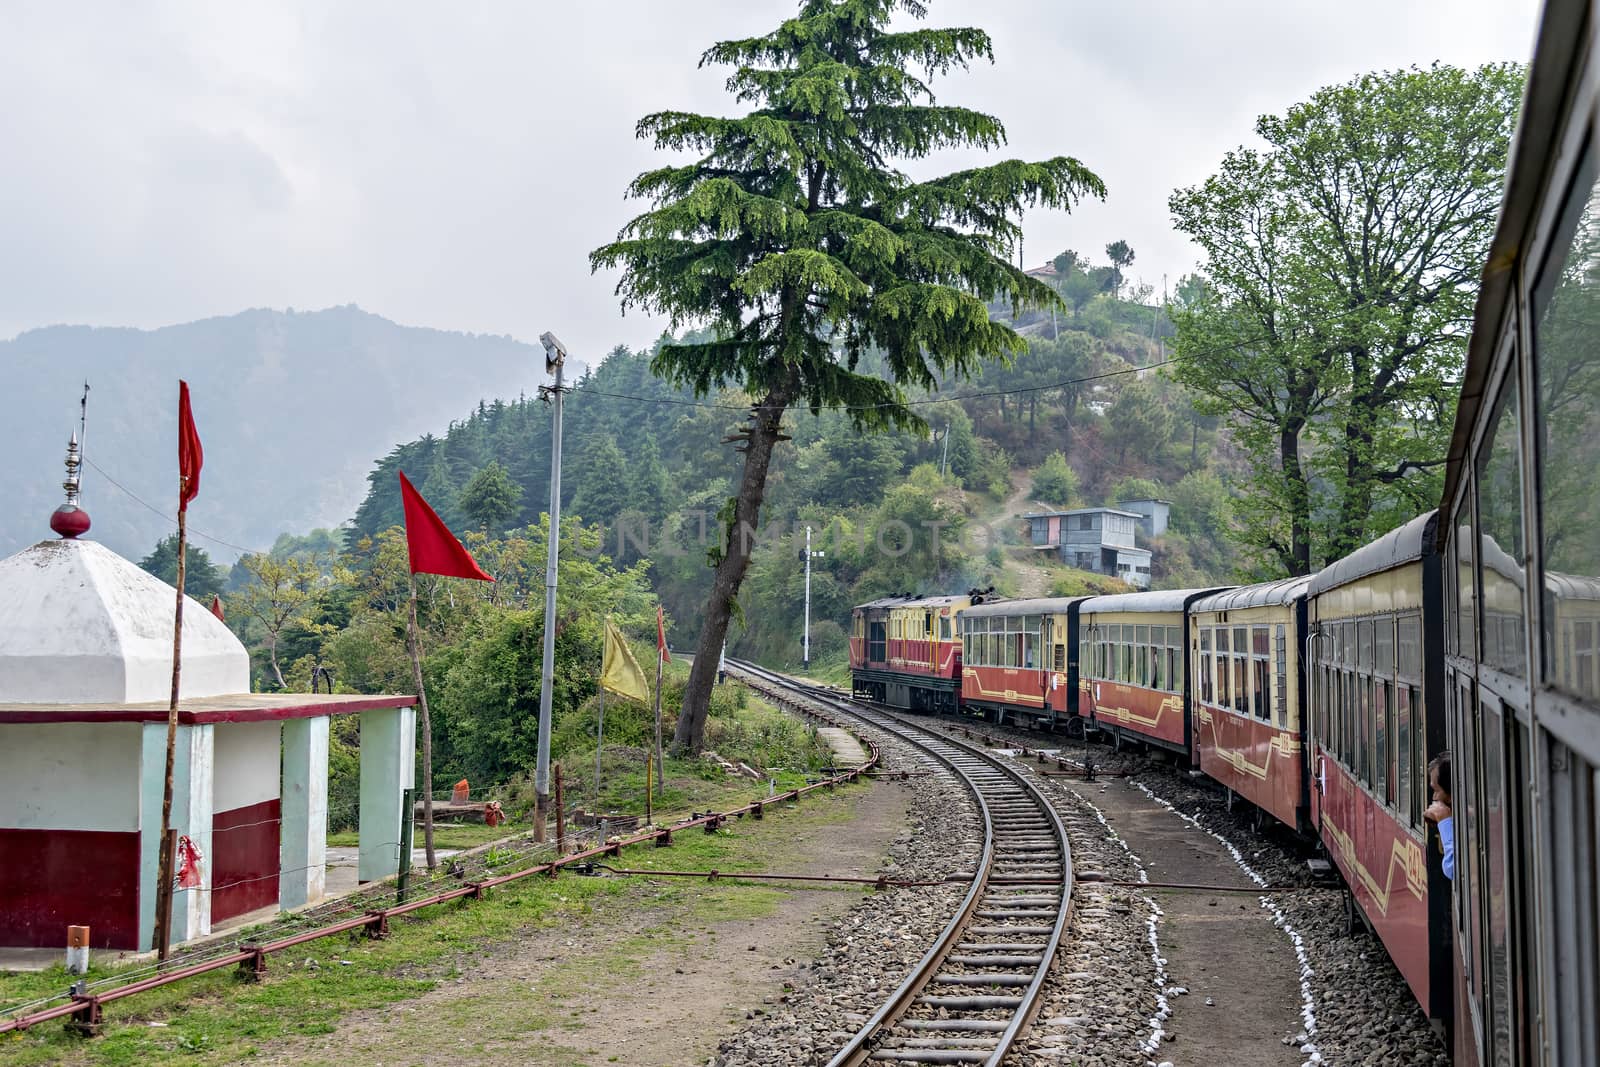 Shoghi,Himachal Pradesh, India: April 14th, 2015- Narrow gauge Shivalik Deluxe express train on curve while departing Shoghi.